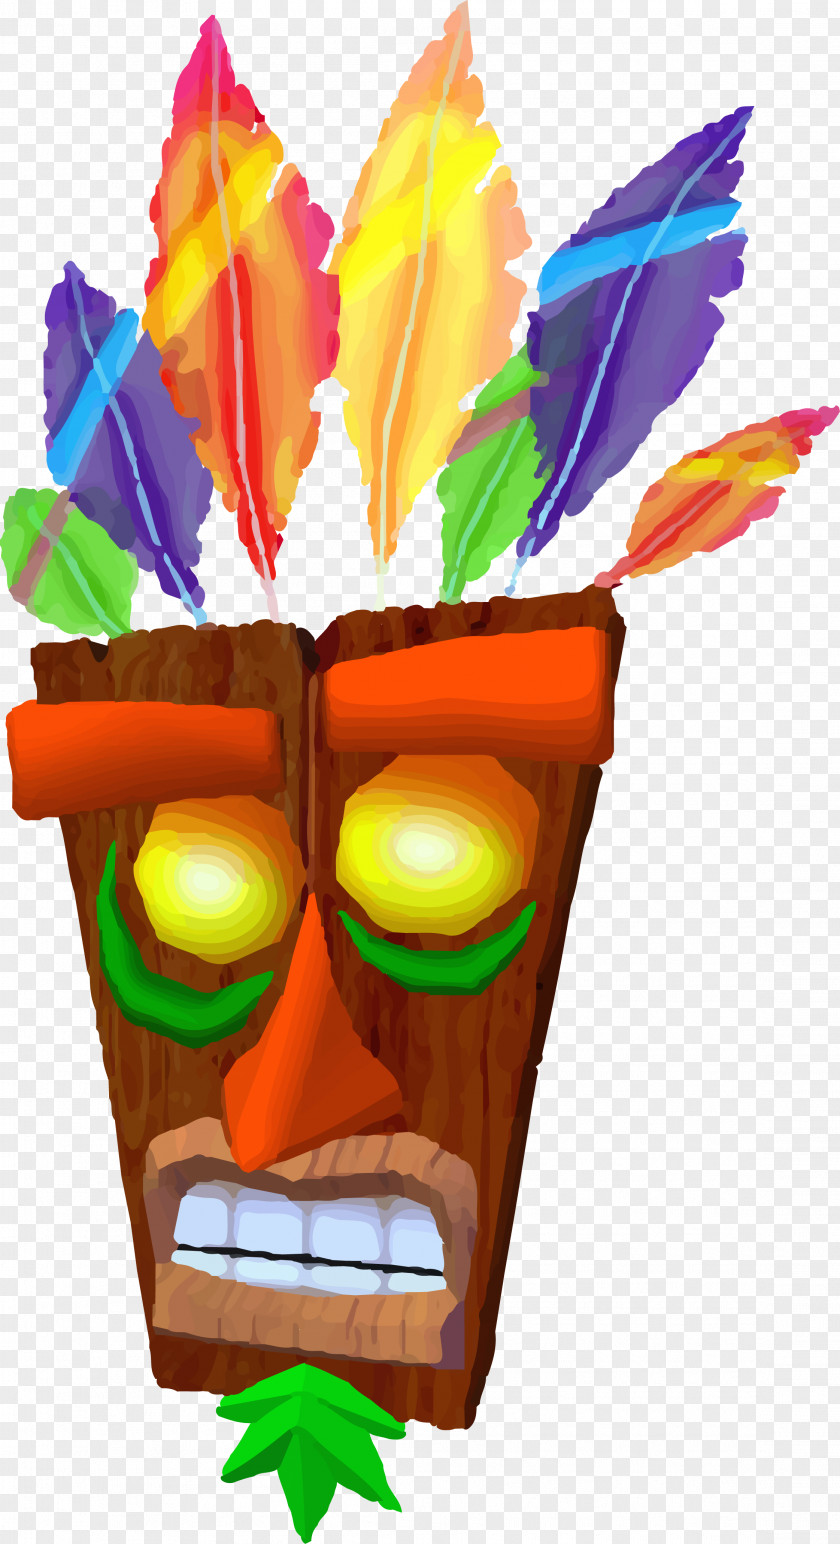 Crash Bandicoot Bandicoot: The Wrath Of Cortex Bash PlayStation 4 N. Sane Trilogy PNG